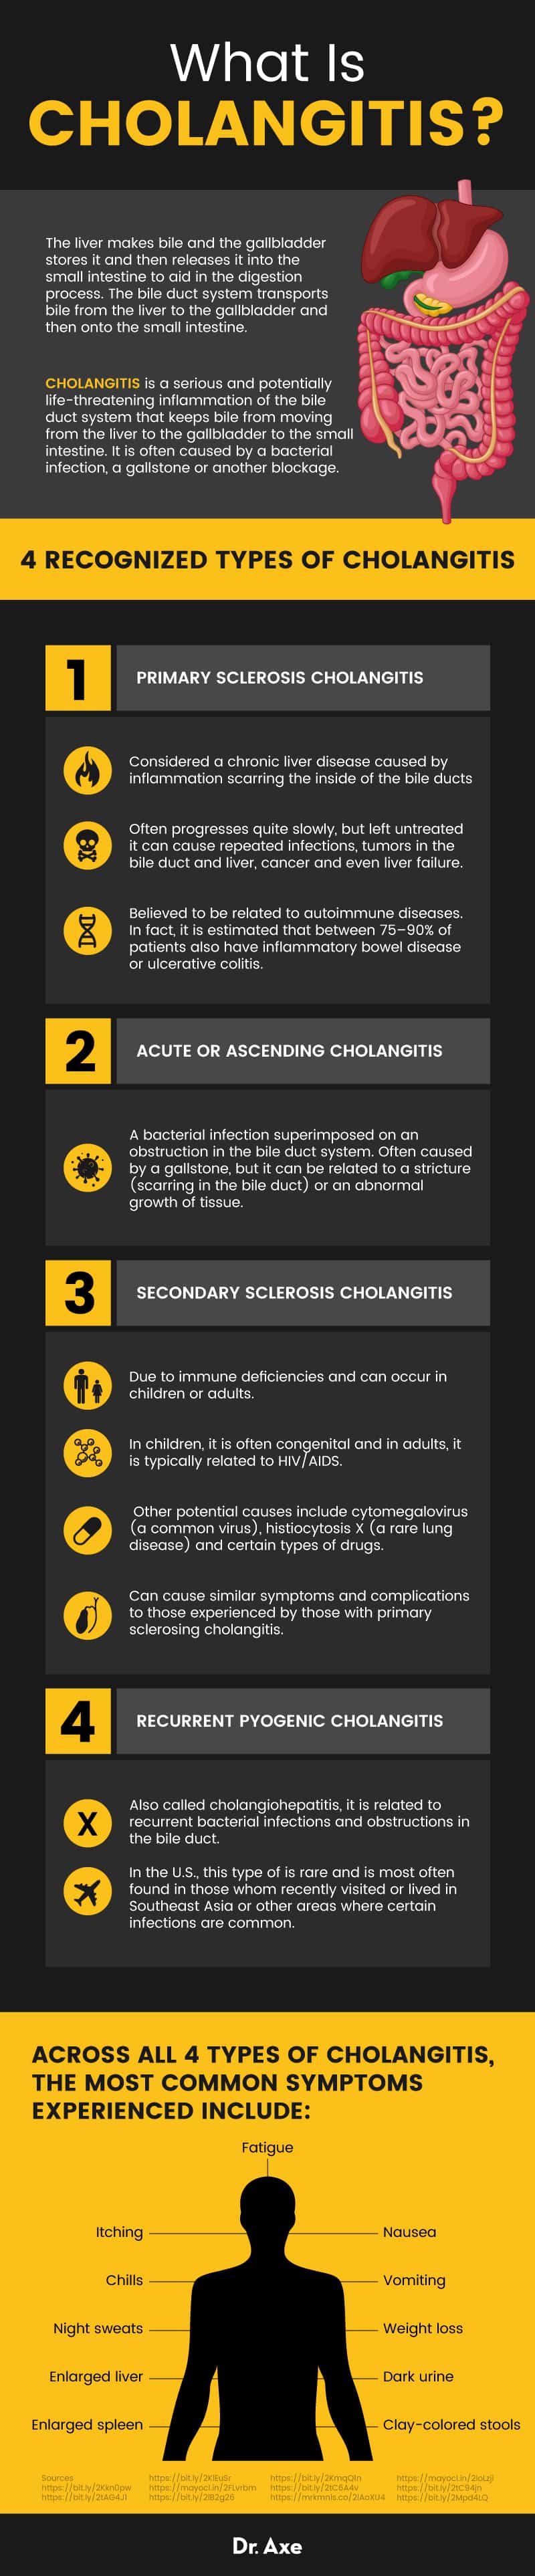 Cholangitis - Dr. Axe